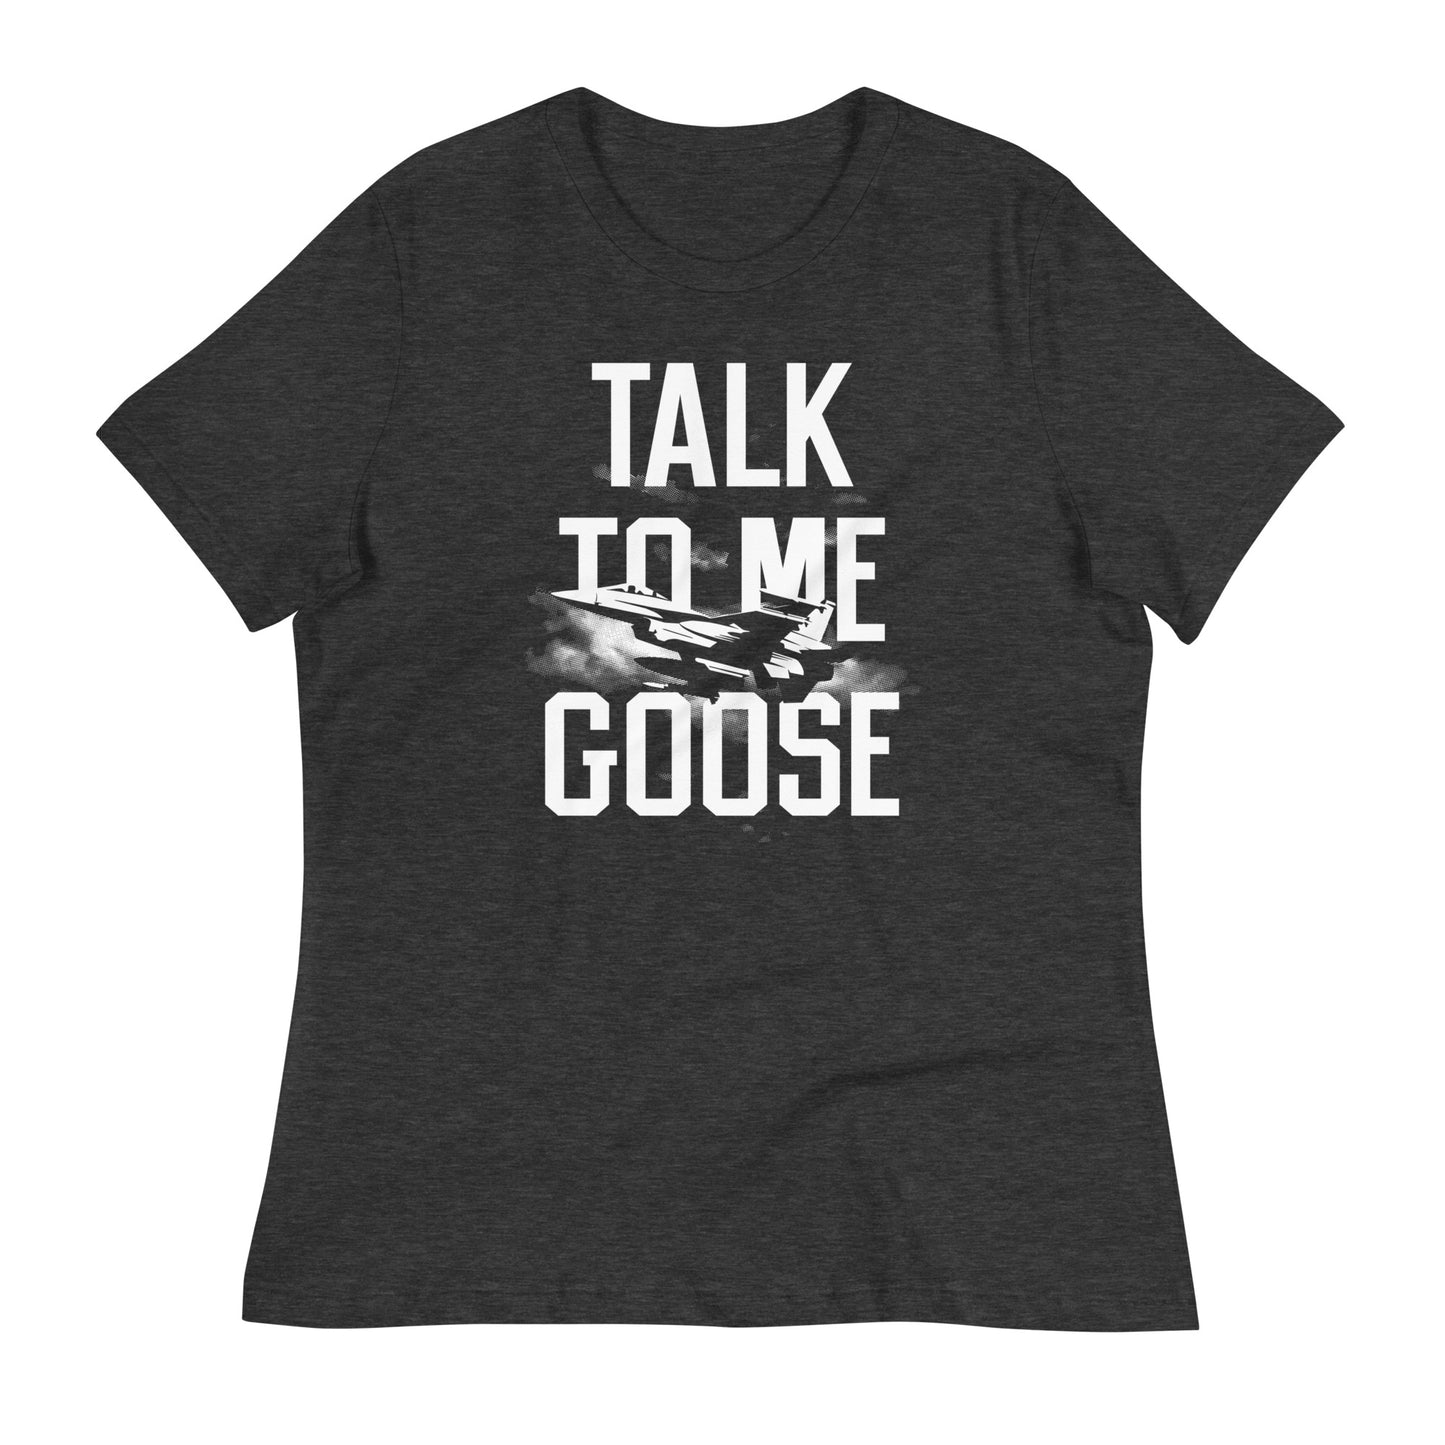 Talk To Me Goose Women's Signature Tee